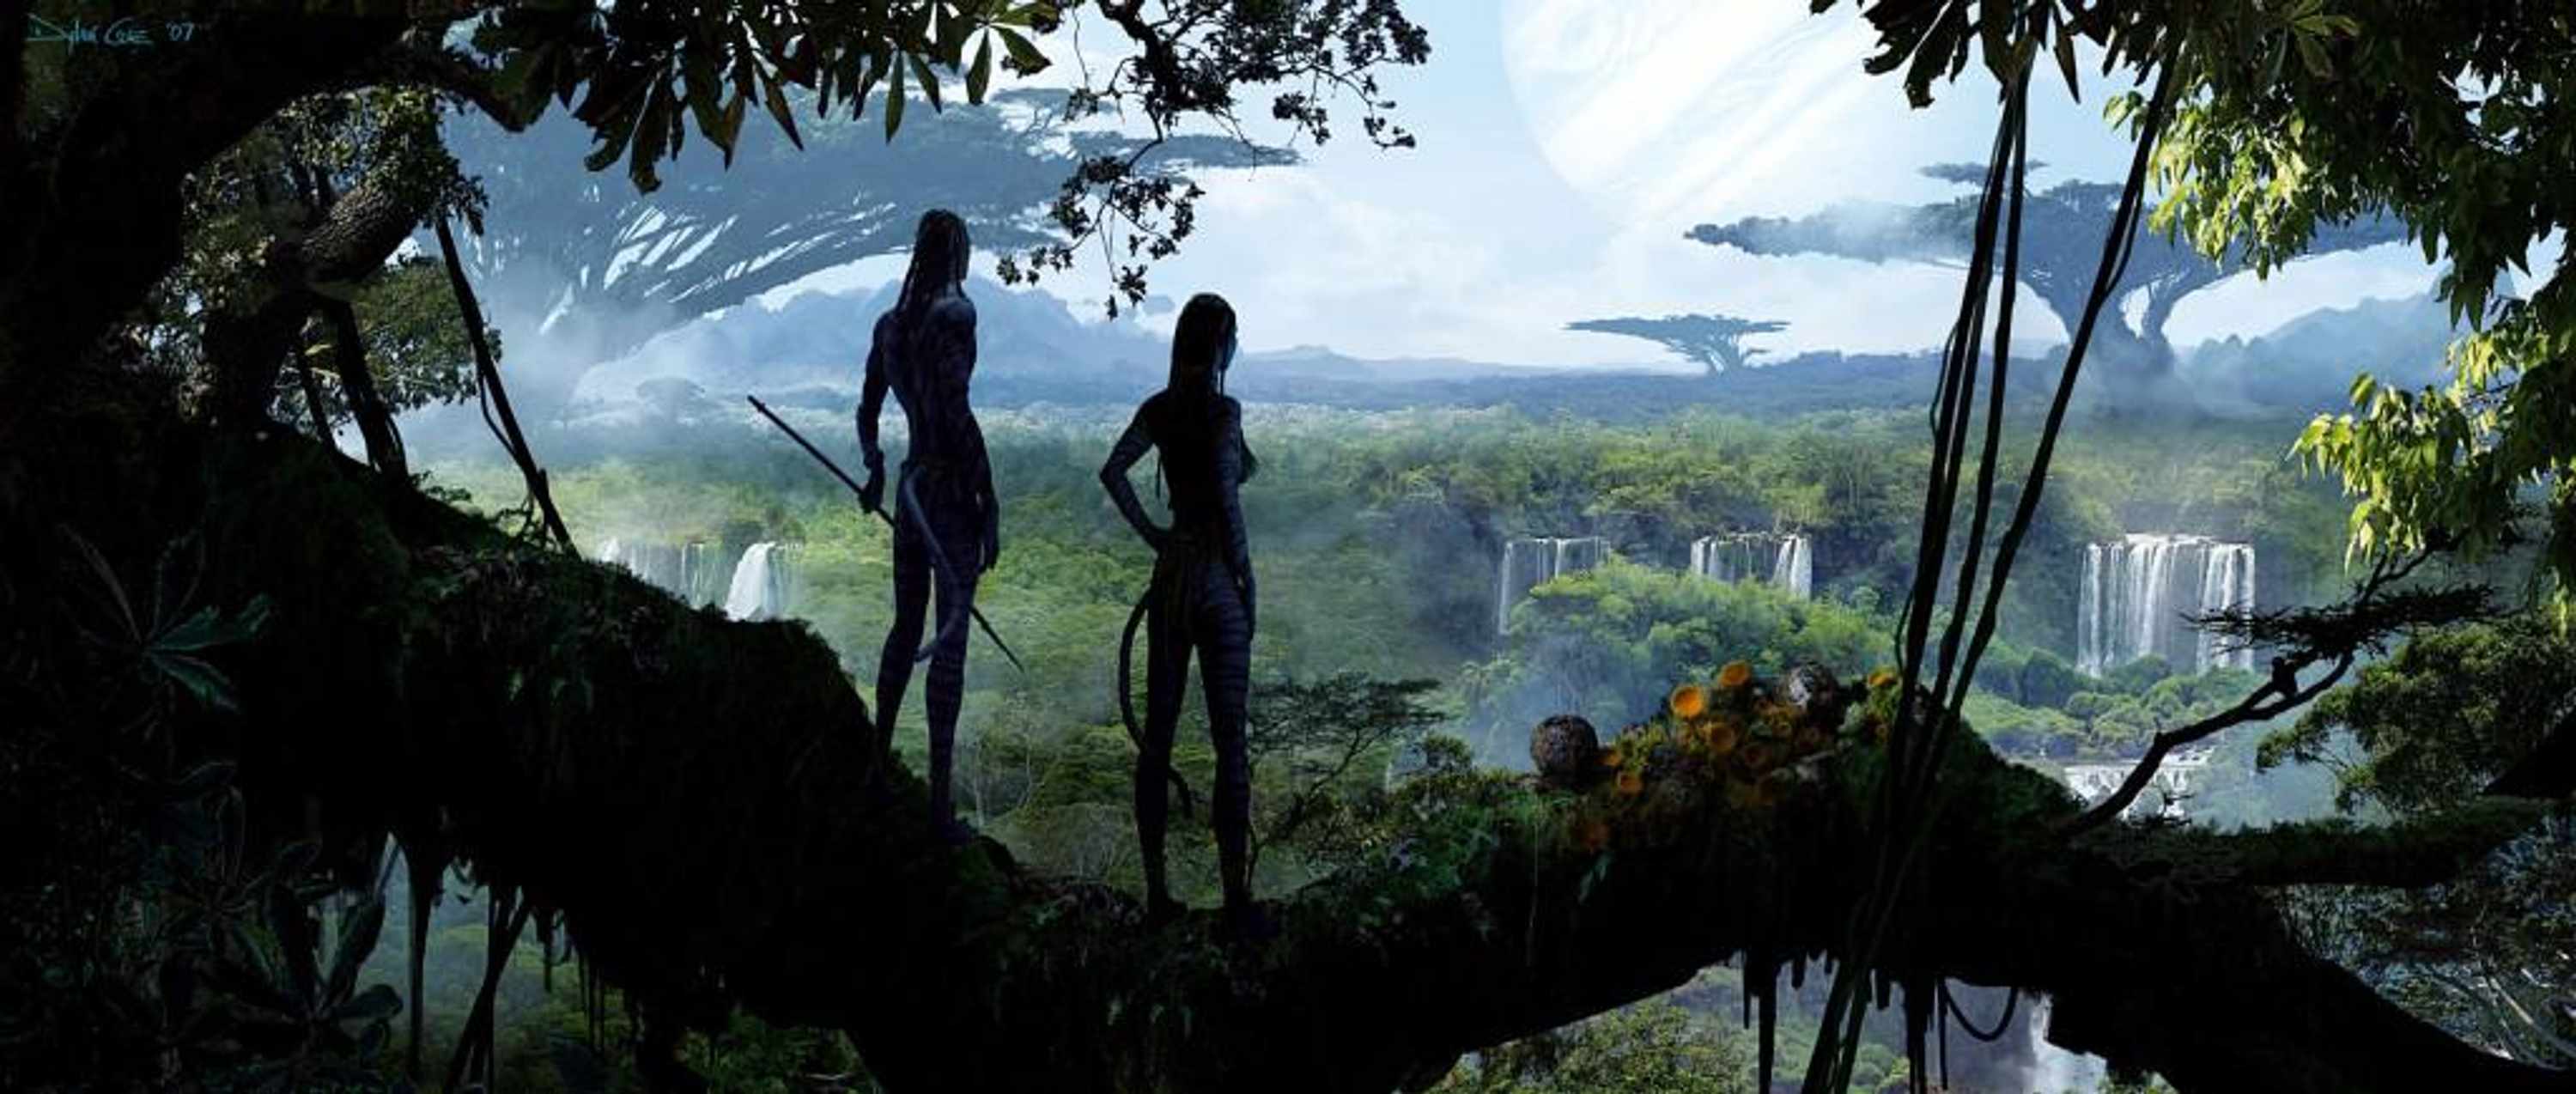 Avatar-landscape1